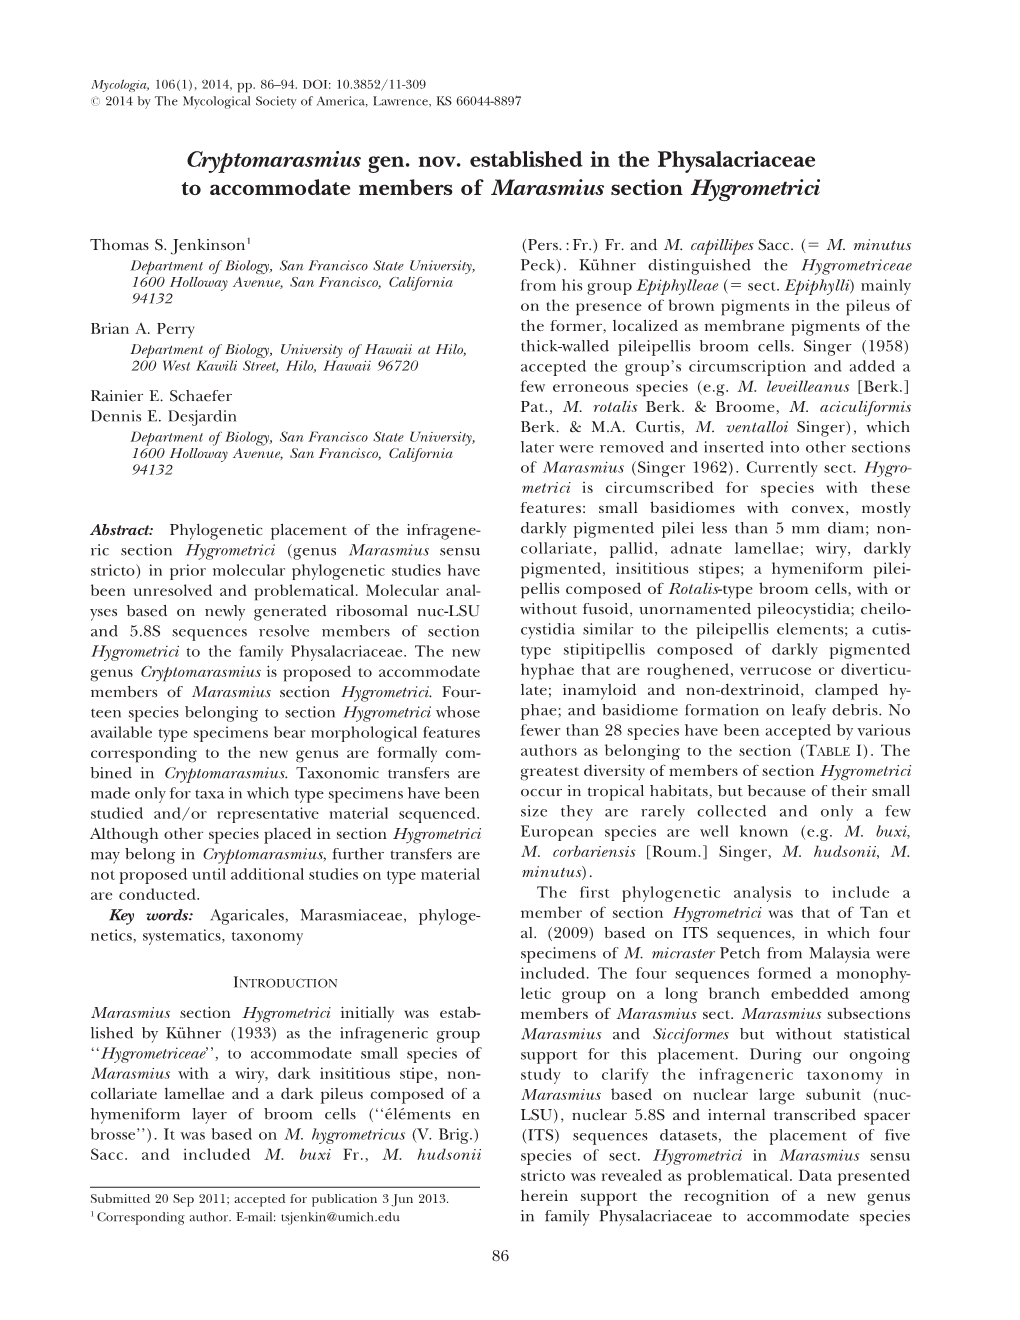 Cryptomarasmius Gen. Nov. Established in the Physalacriaceae to Accommodate Members of Marasmius Section Hygrometrici